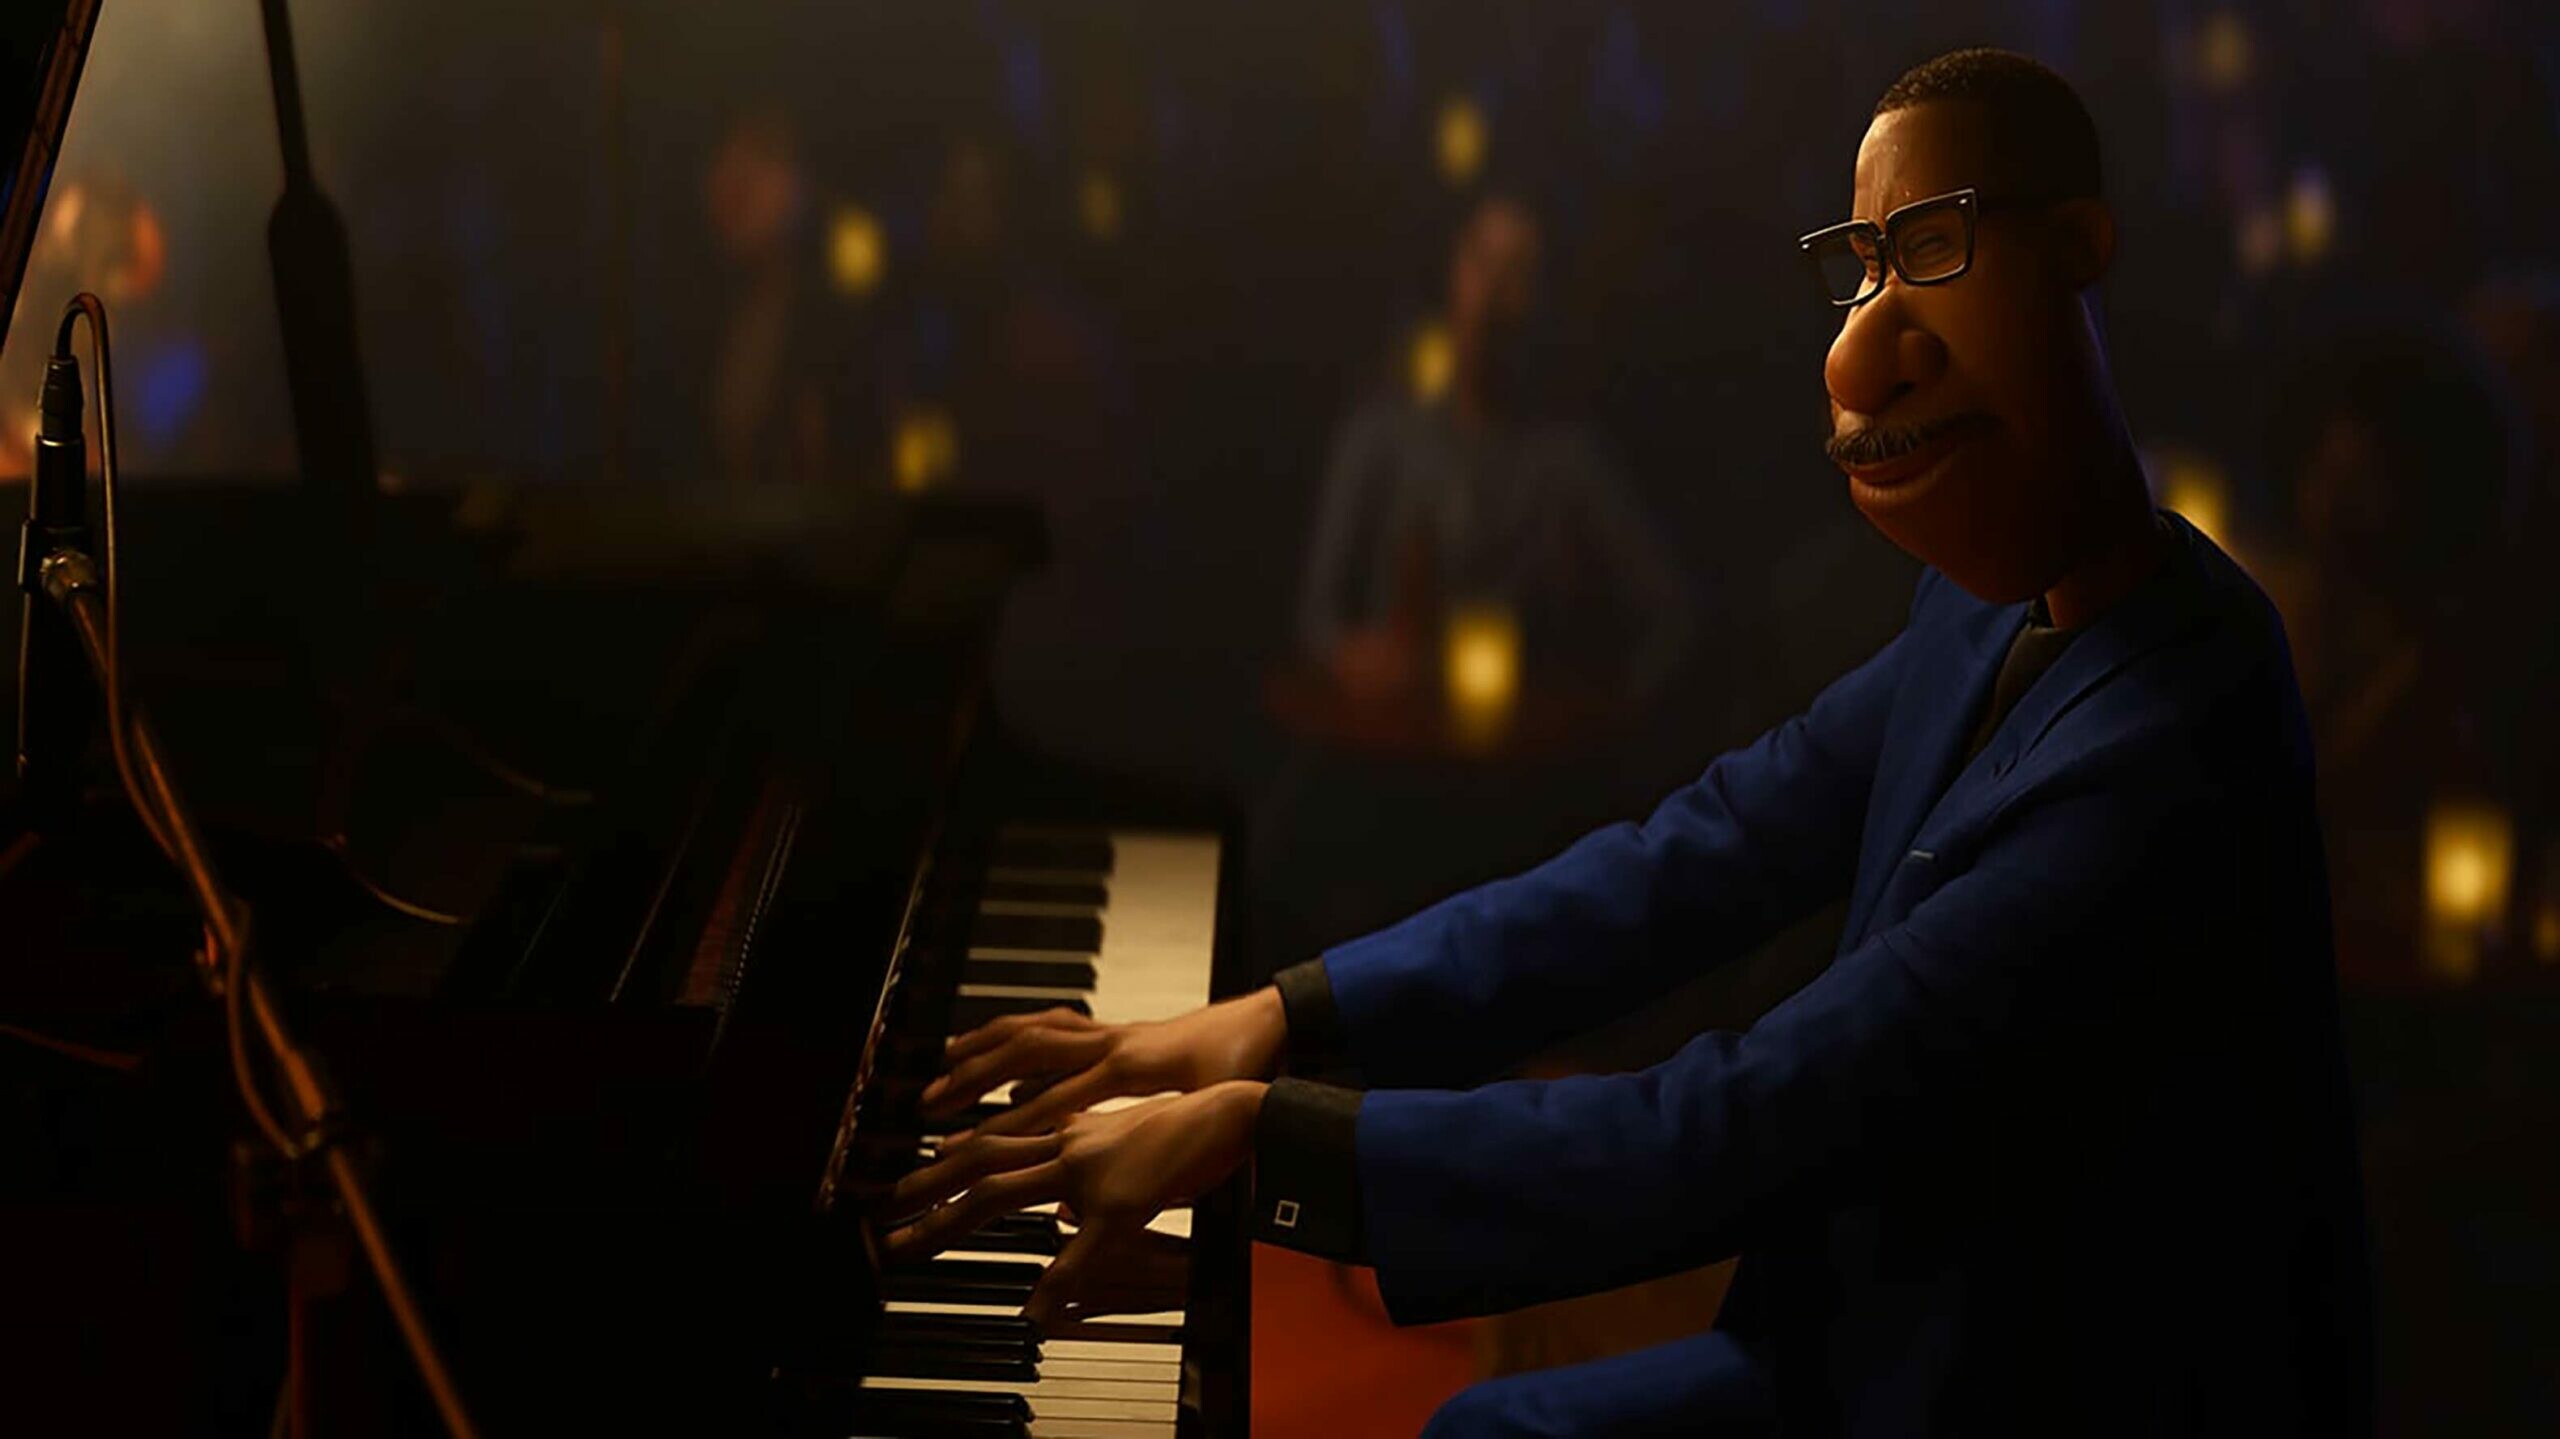 Soul (Pixar): Disney, Pixar, Jamie Foxx as Joe Gardner, a jazz pianist and music teacher. 2560x1440 HD Wallpaper.